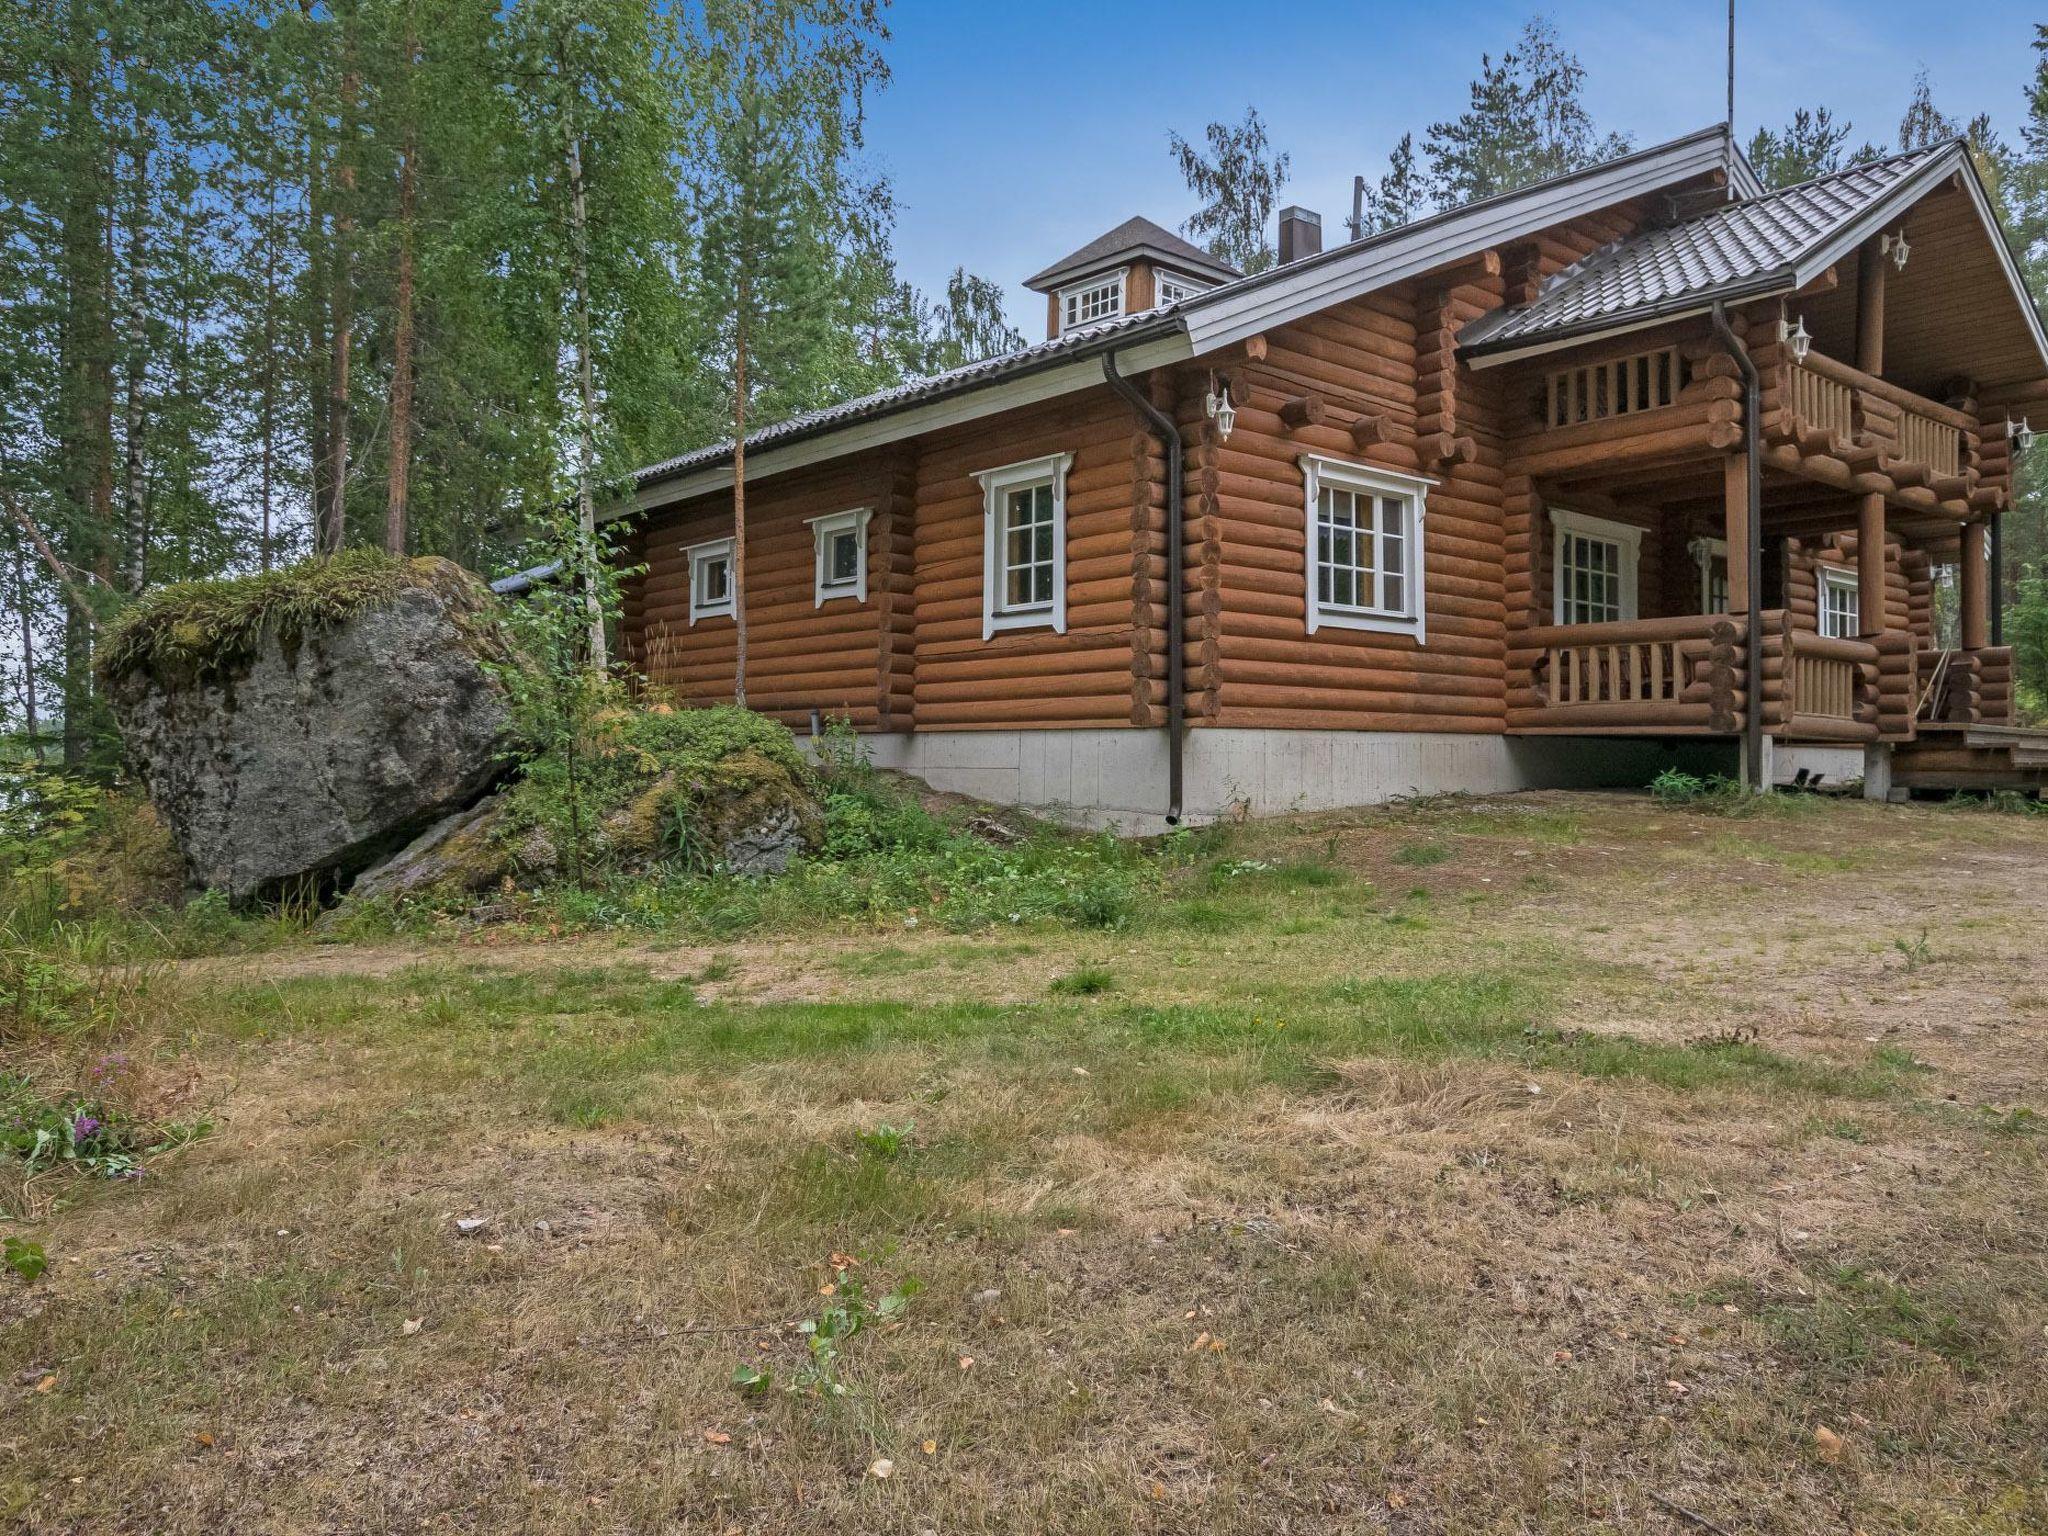 Photo 3 - 5 bedroom House in Mikkeli with sauna